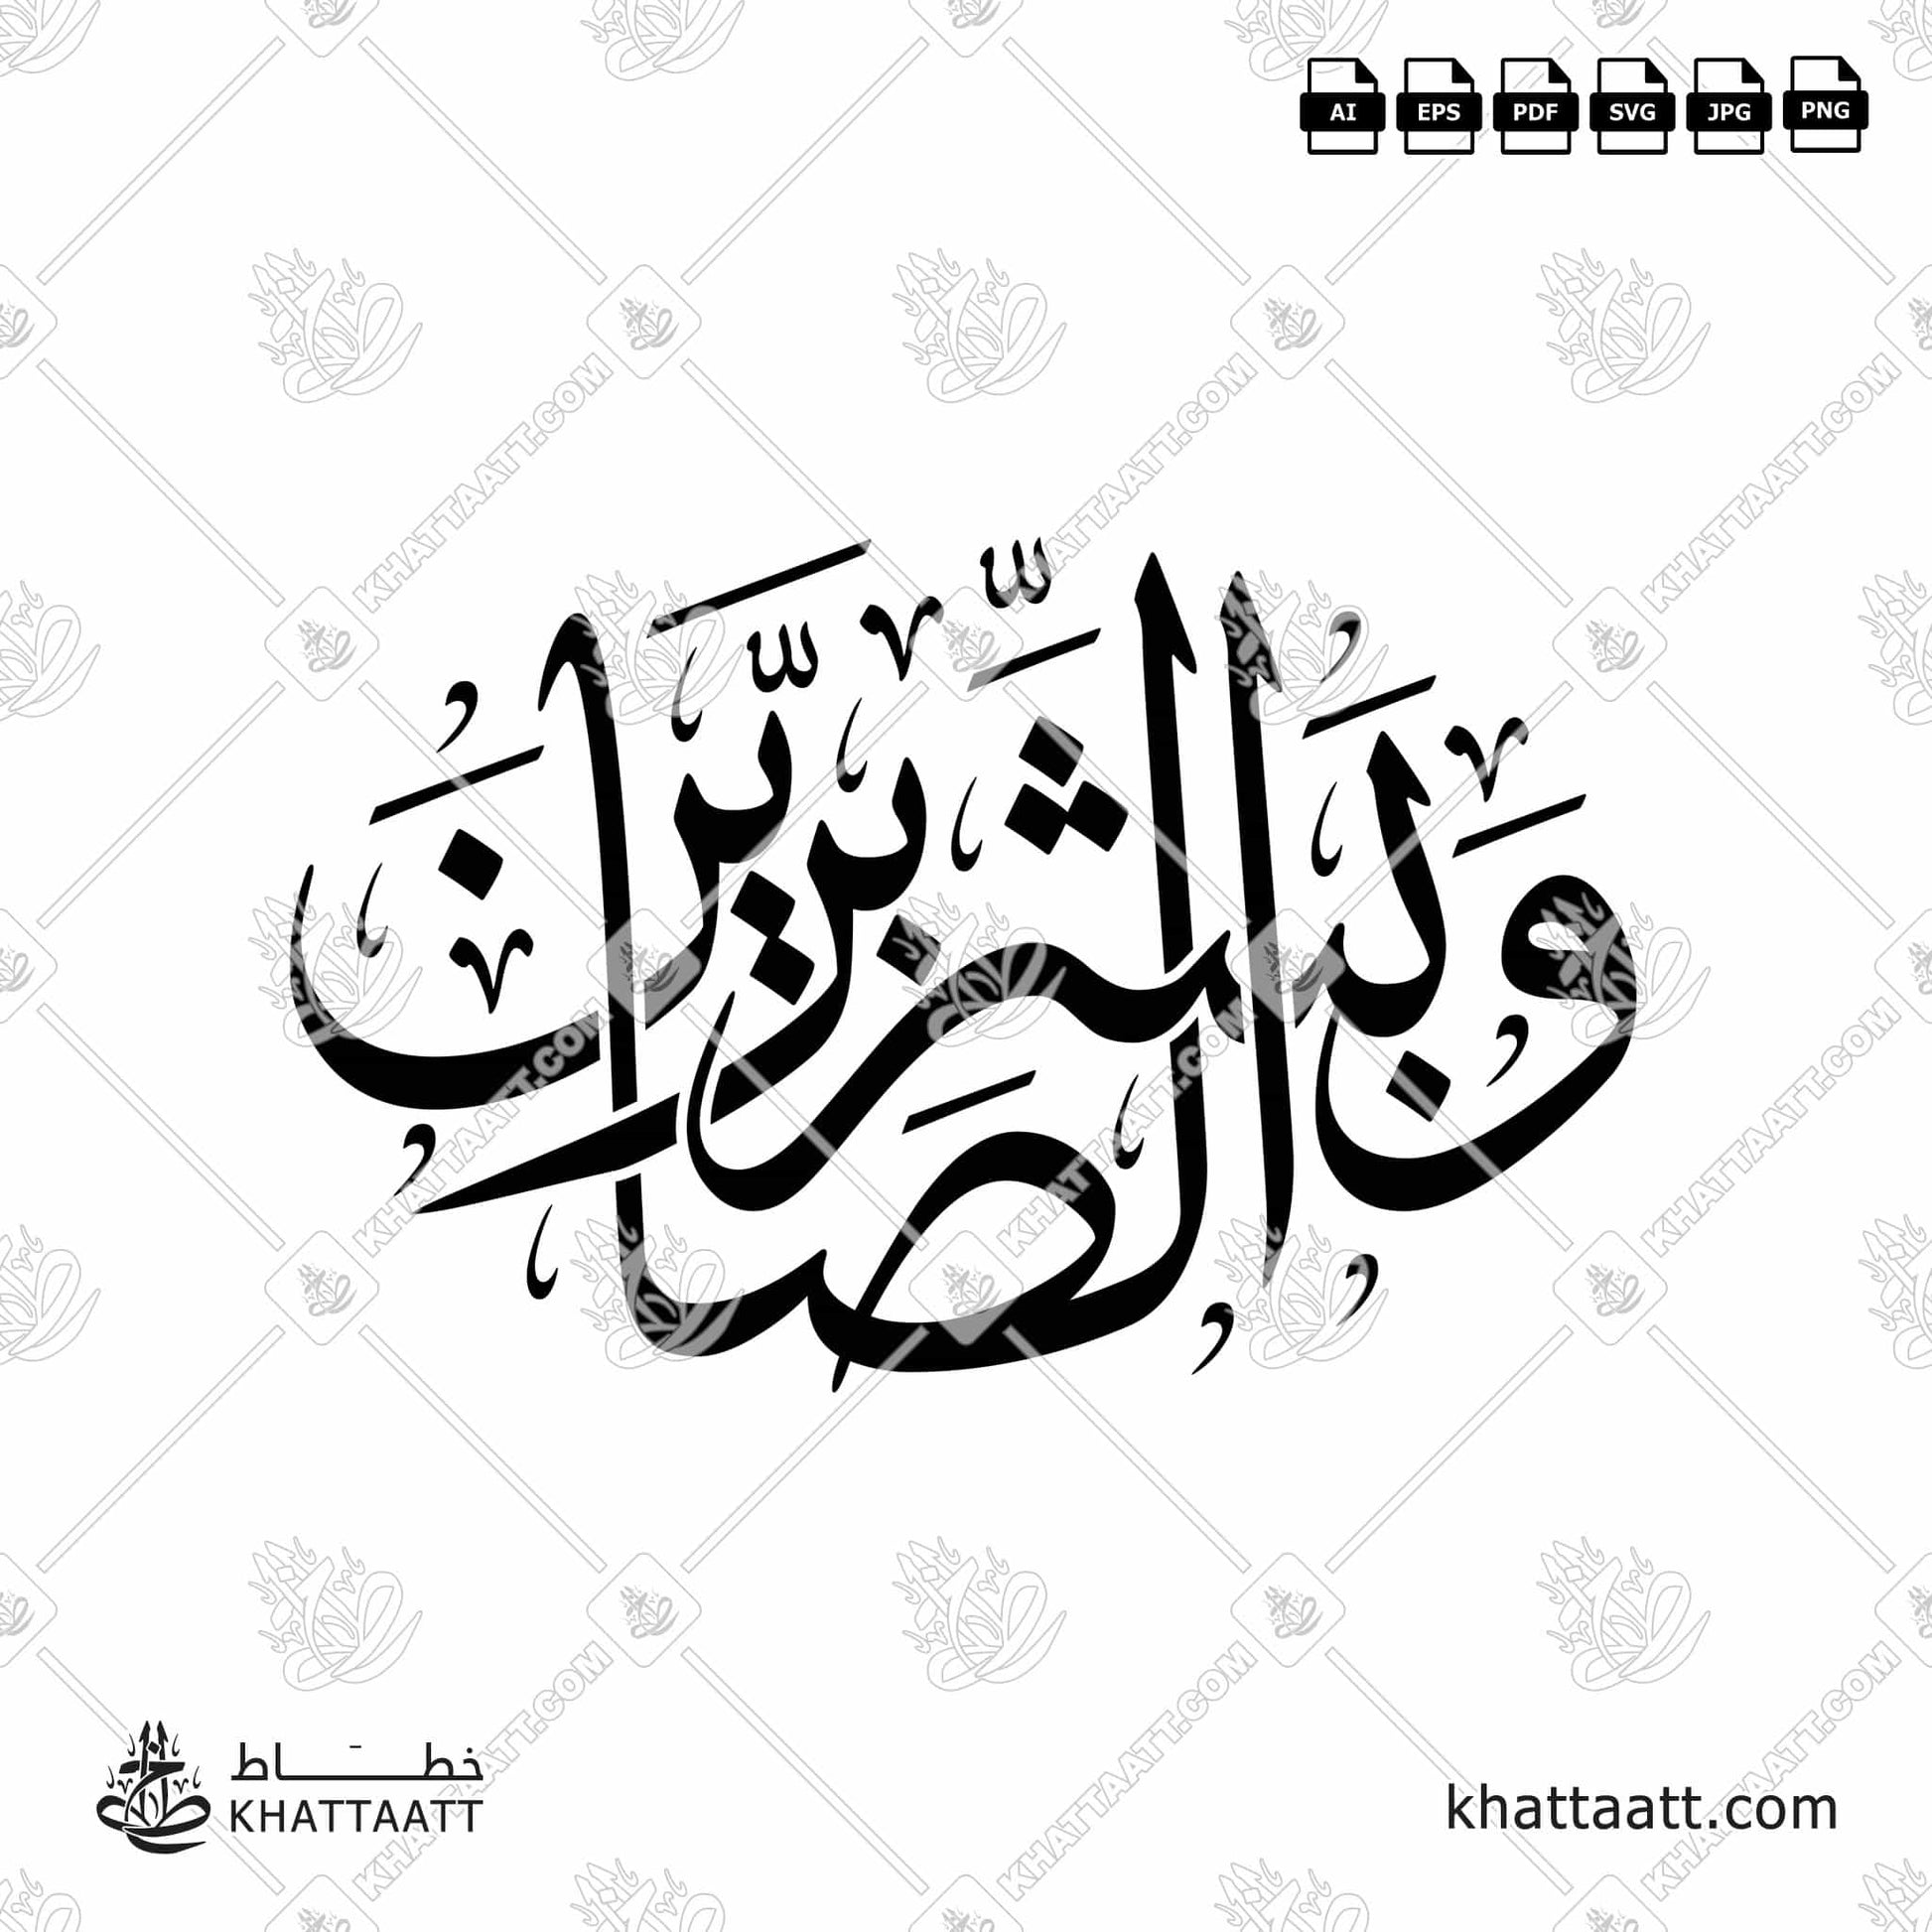 Download Arabic calligraphy تحميل مخطوطة خط عربي of وبشر الصابرين (T034) Thuluth - خط الثلث in vector فيكتور and png